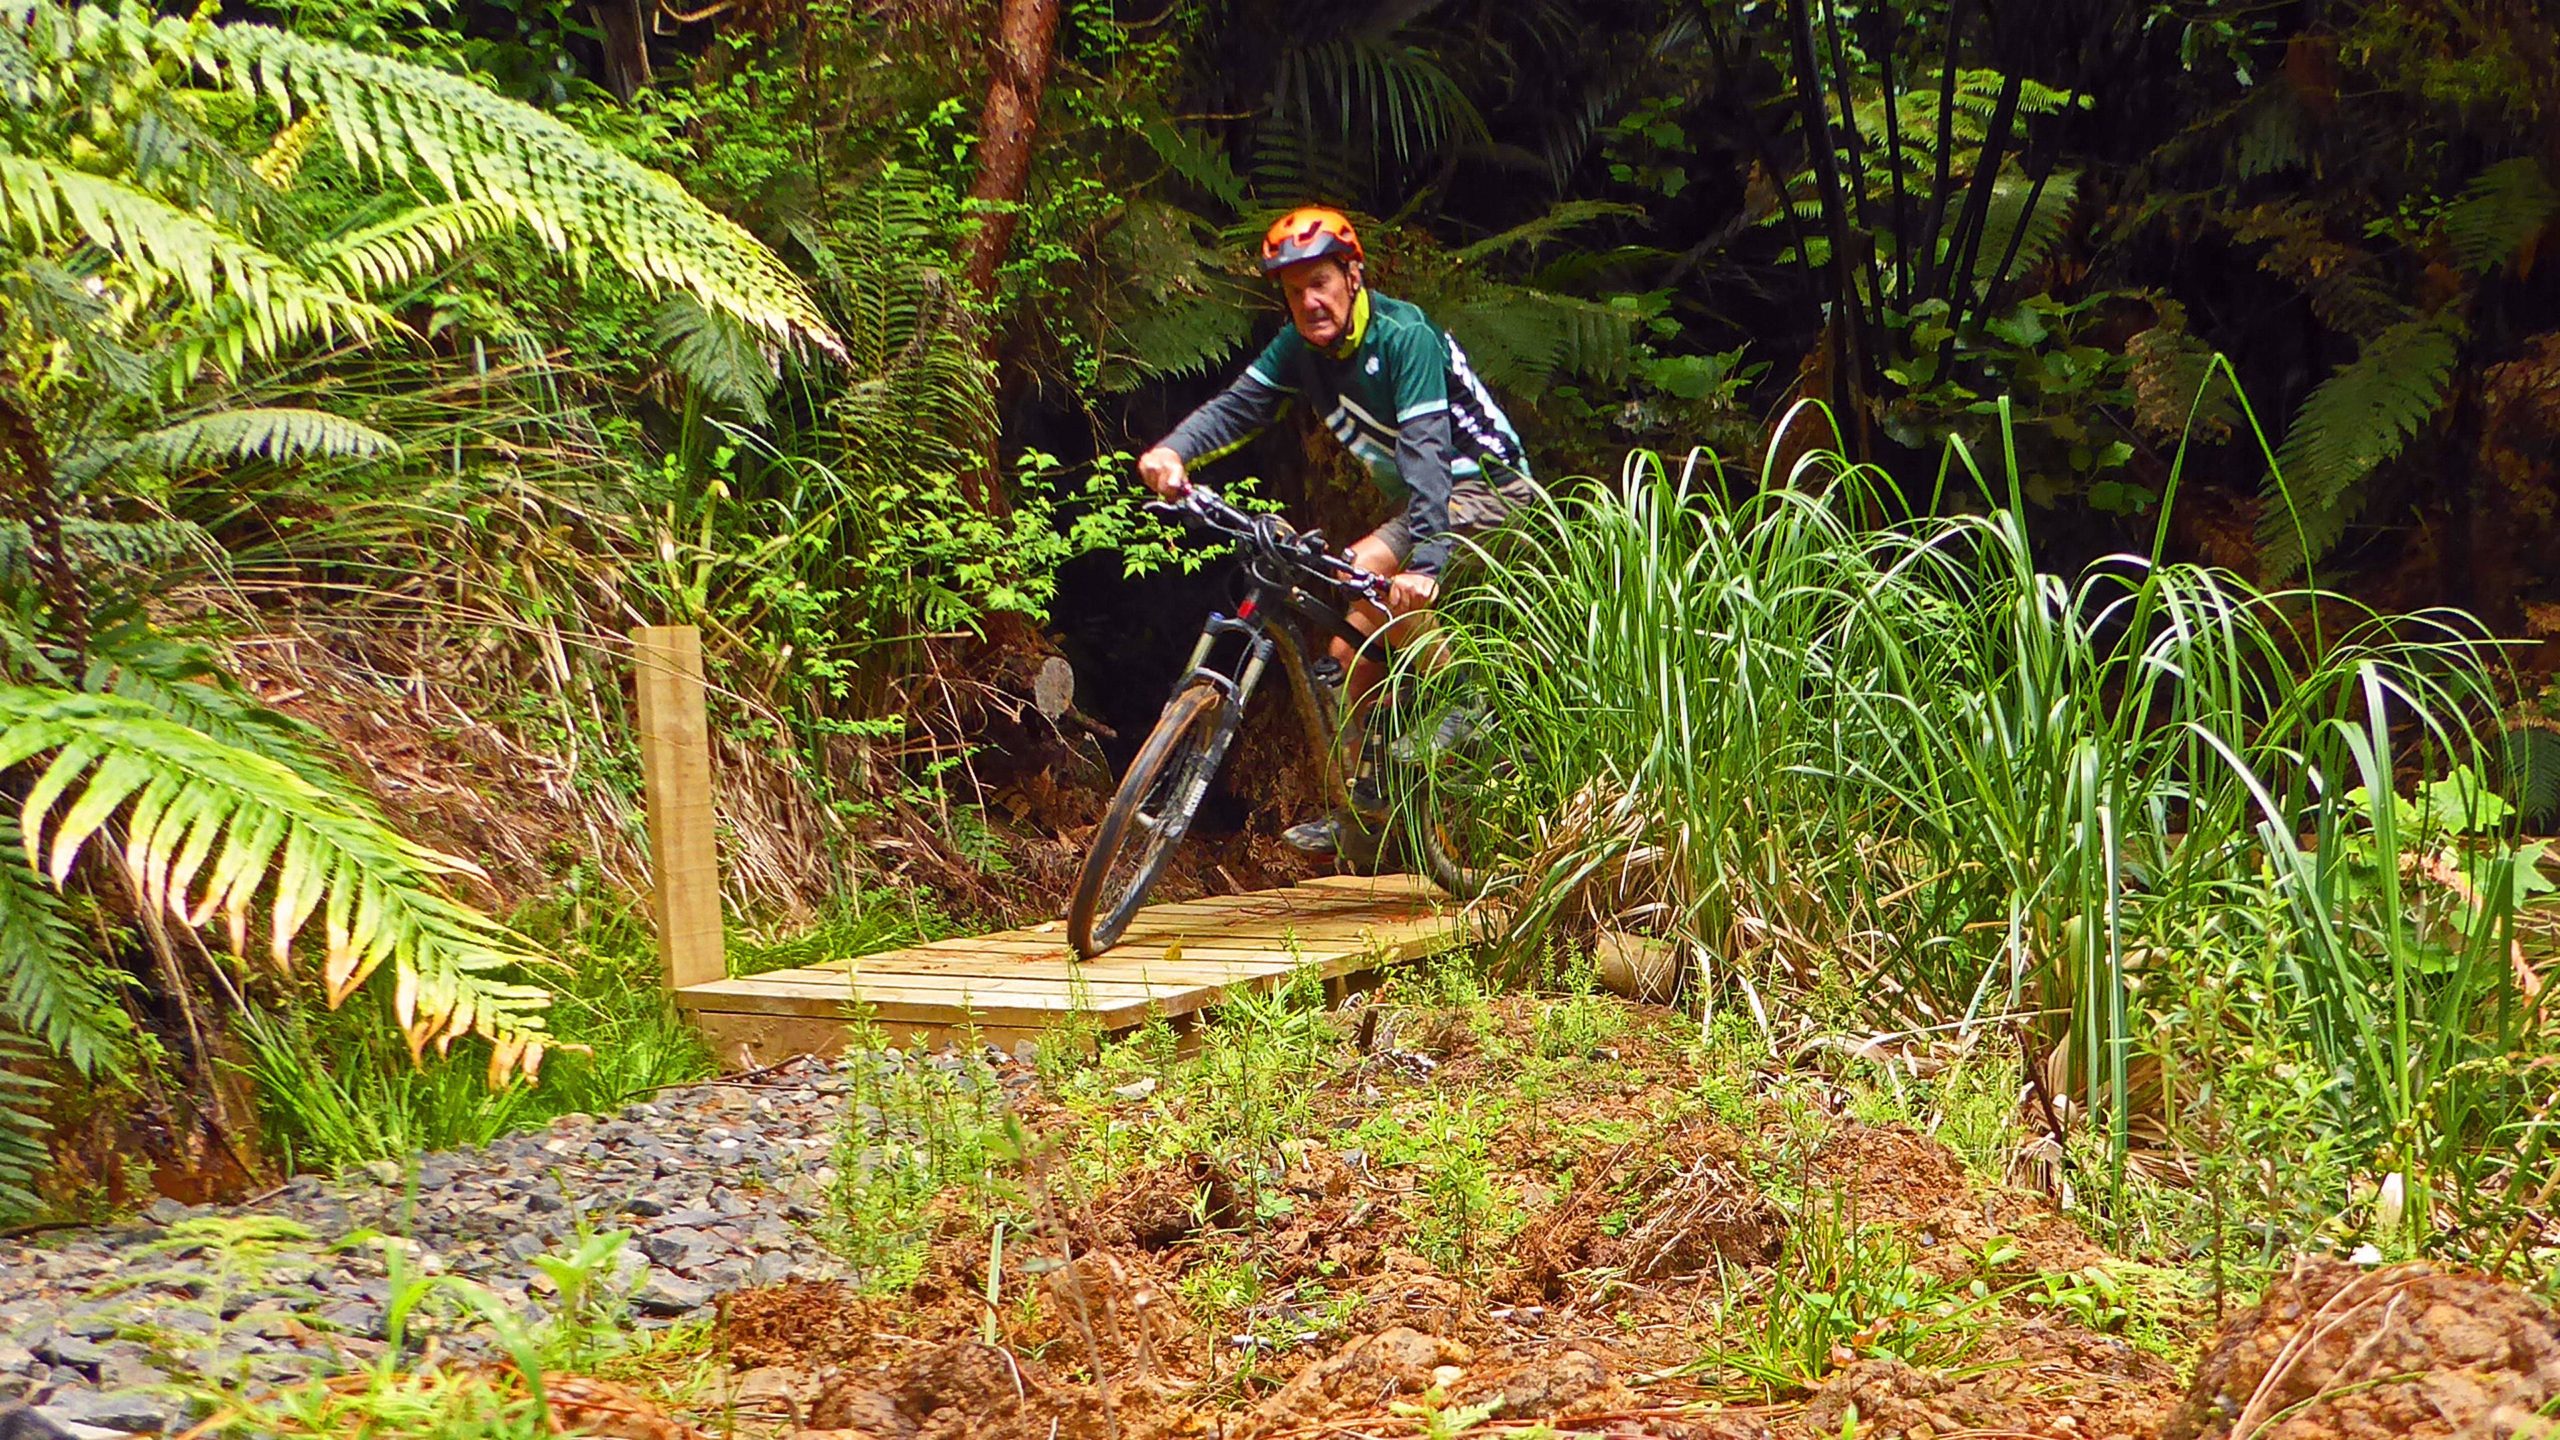 Hotoritori mountain bike trails